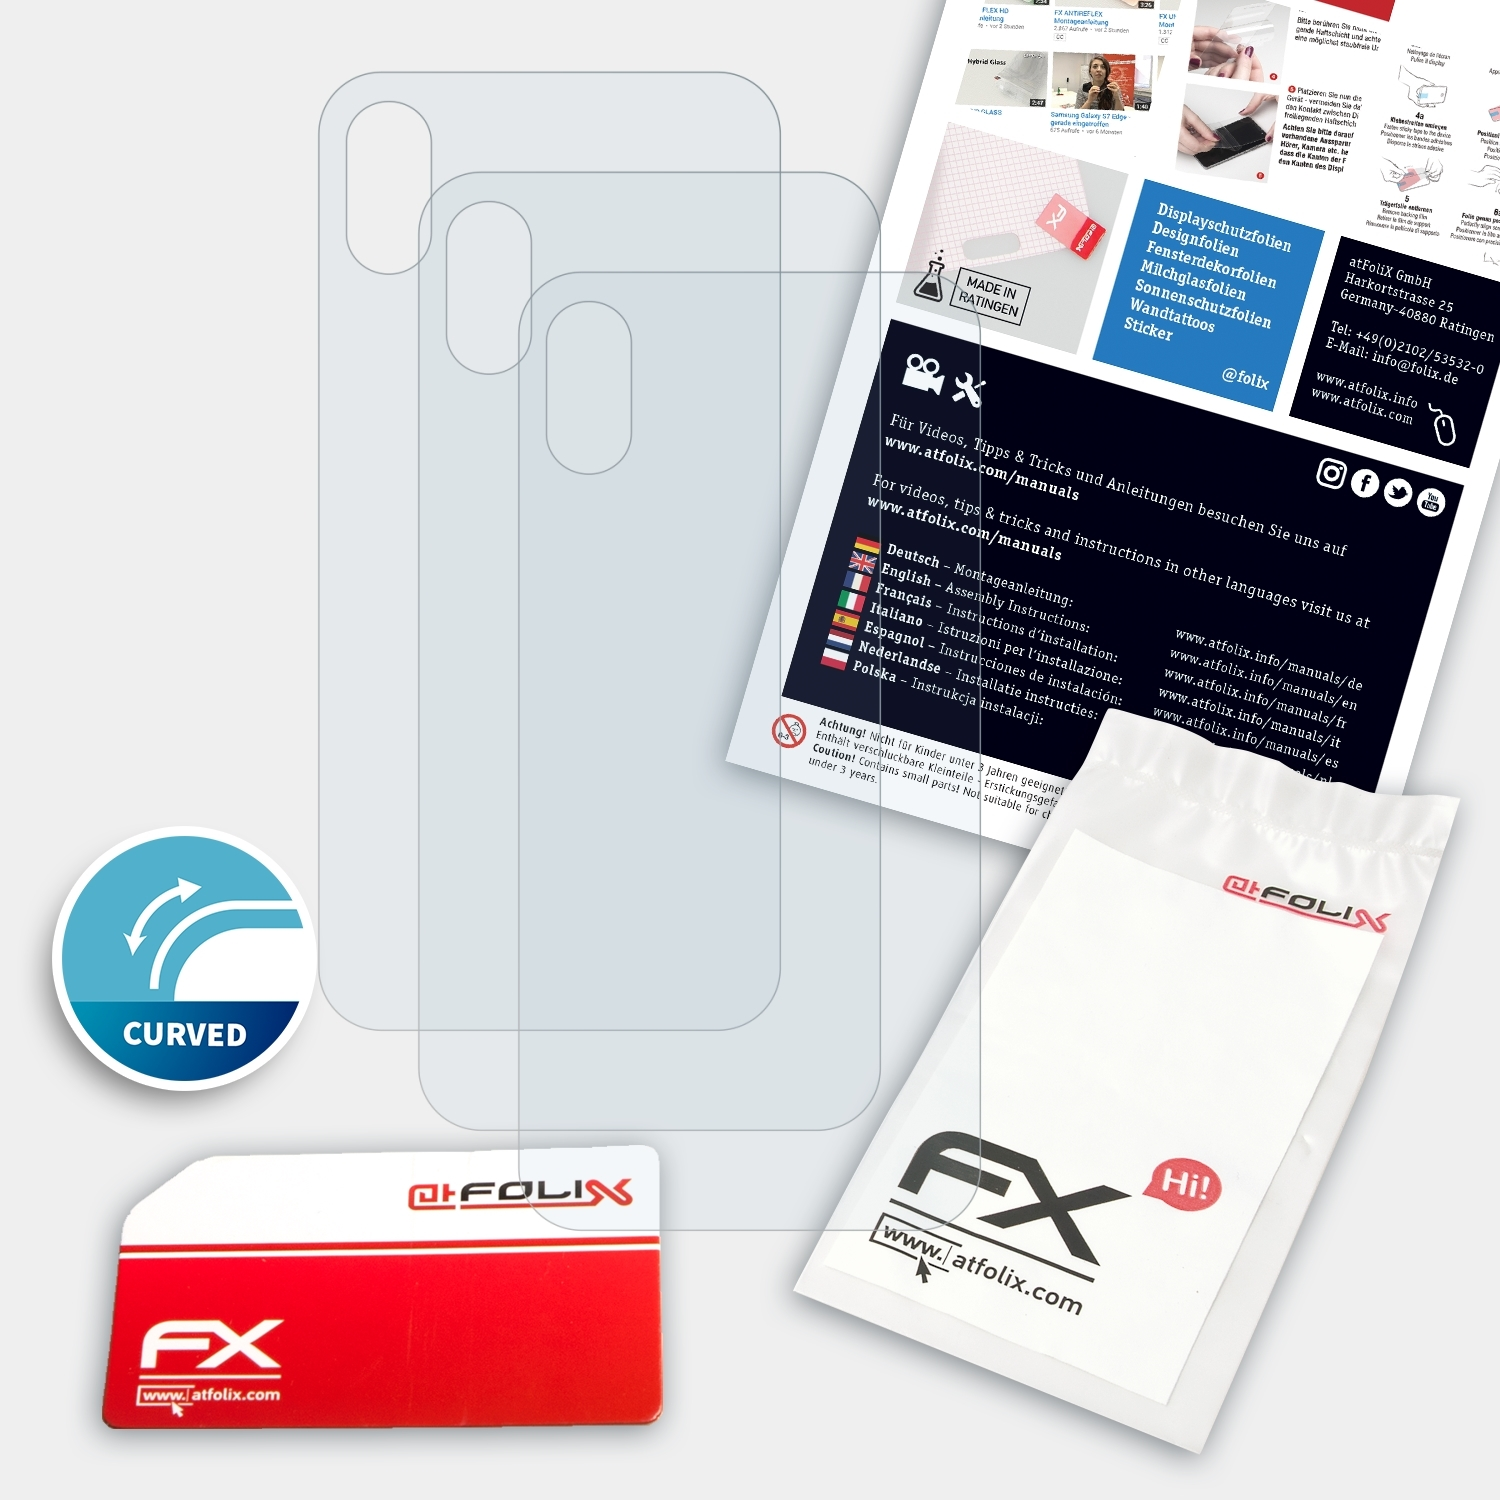 cover)) XS FX-ActiFleX iPhone 3x Displayschutz(für ATFOLIX (Back Apple